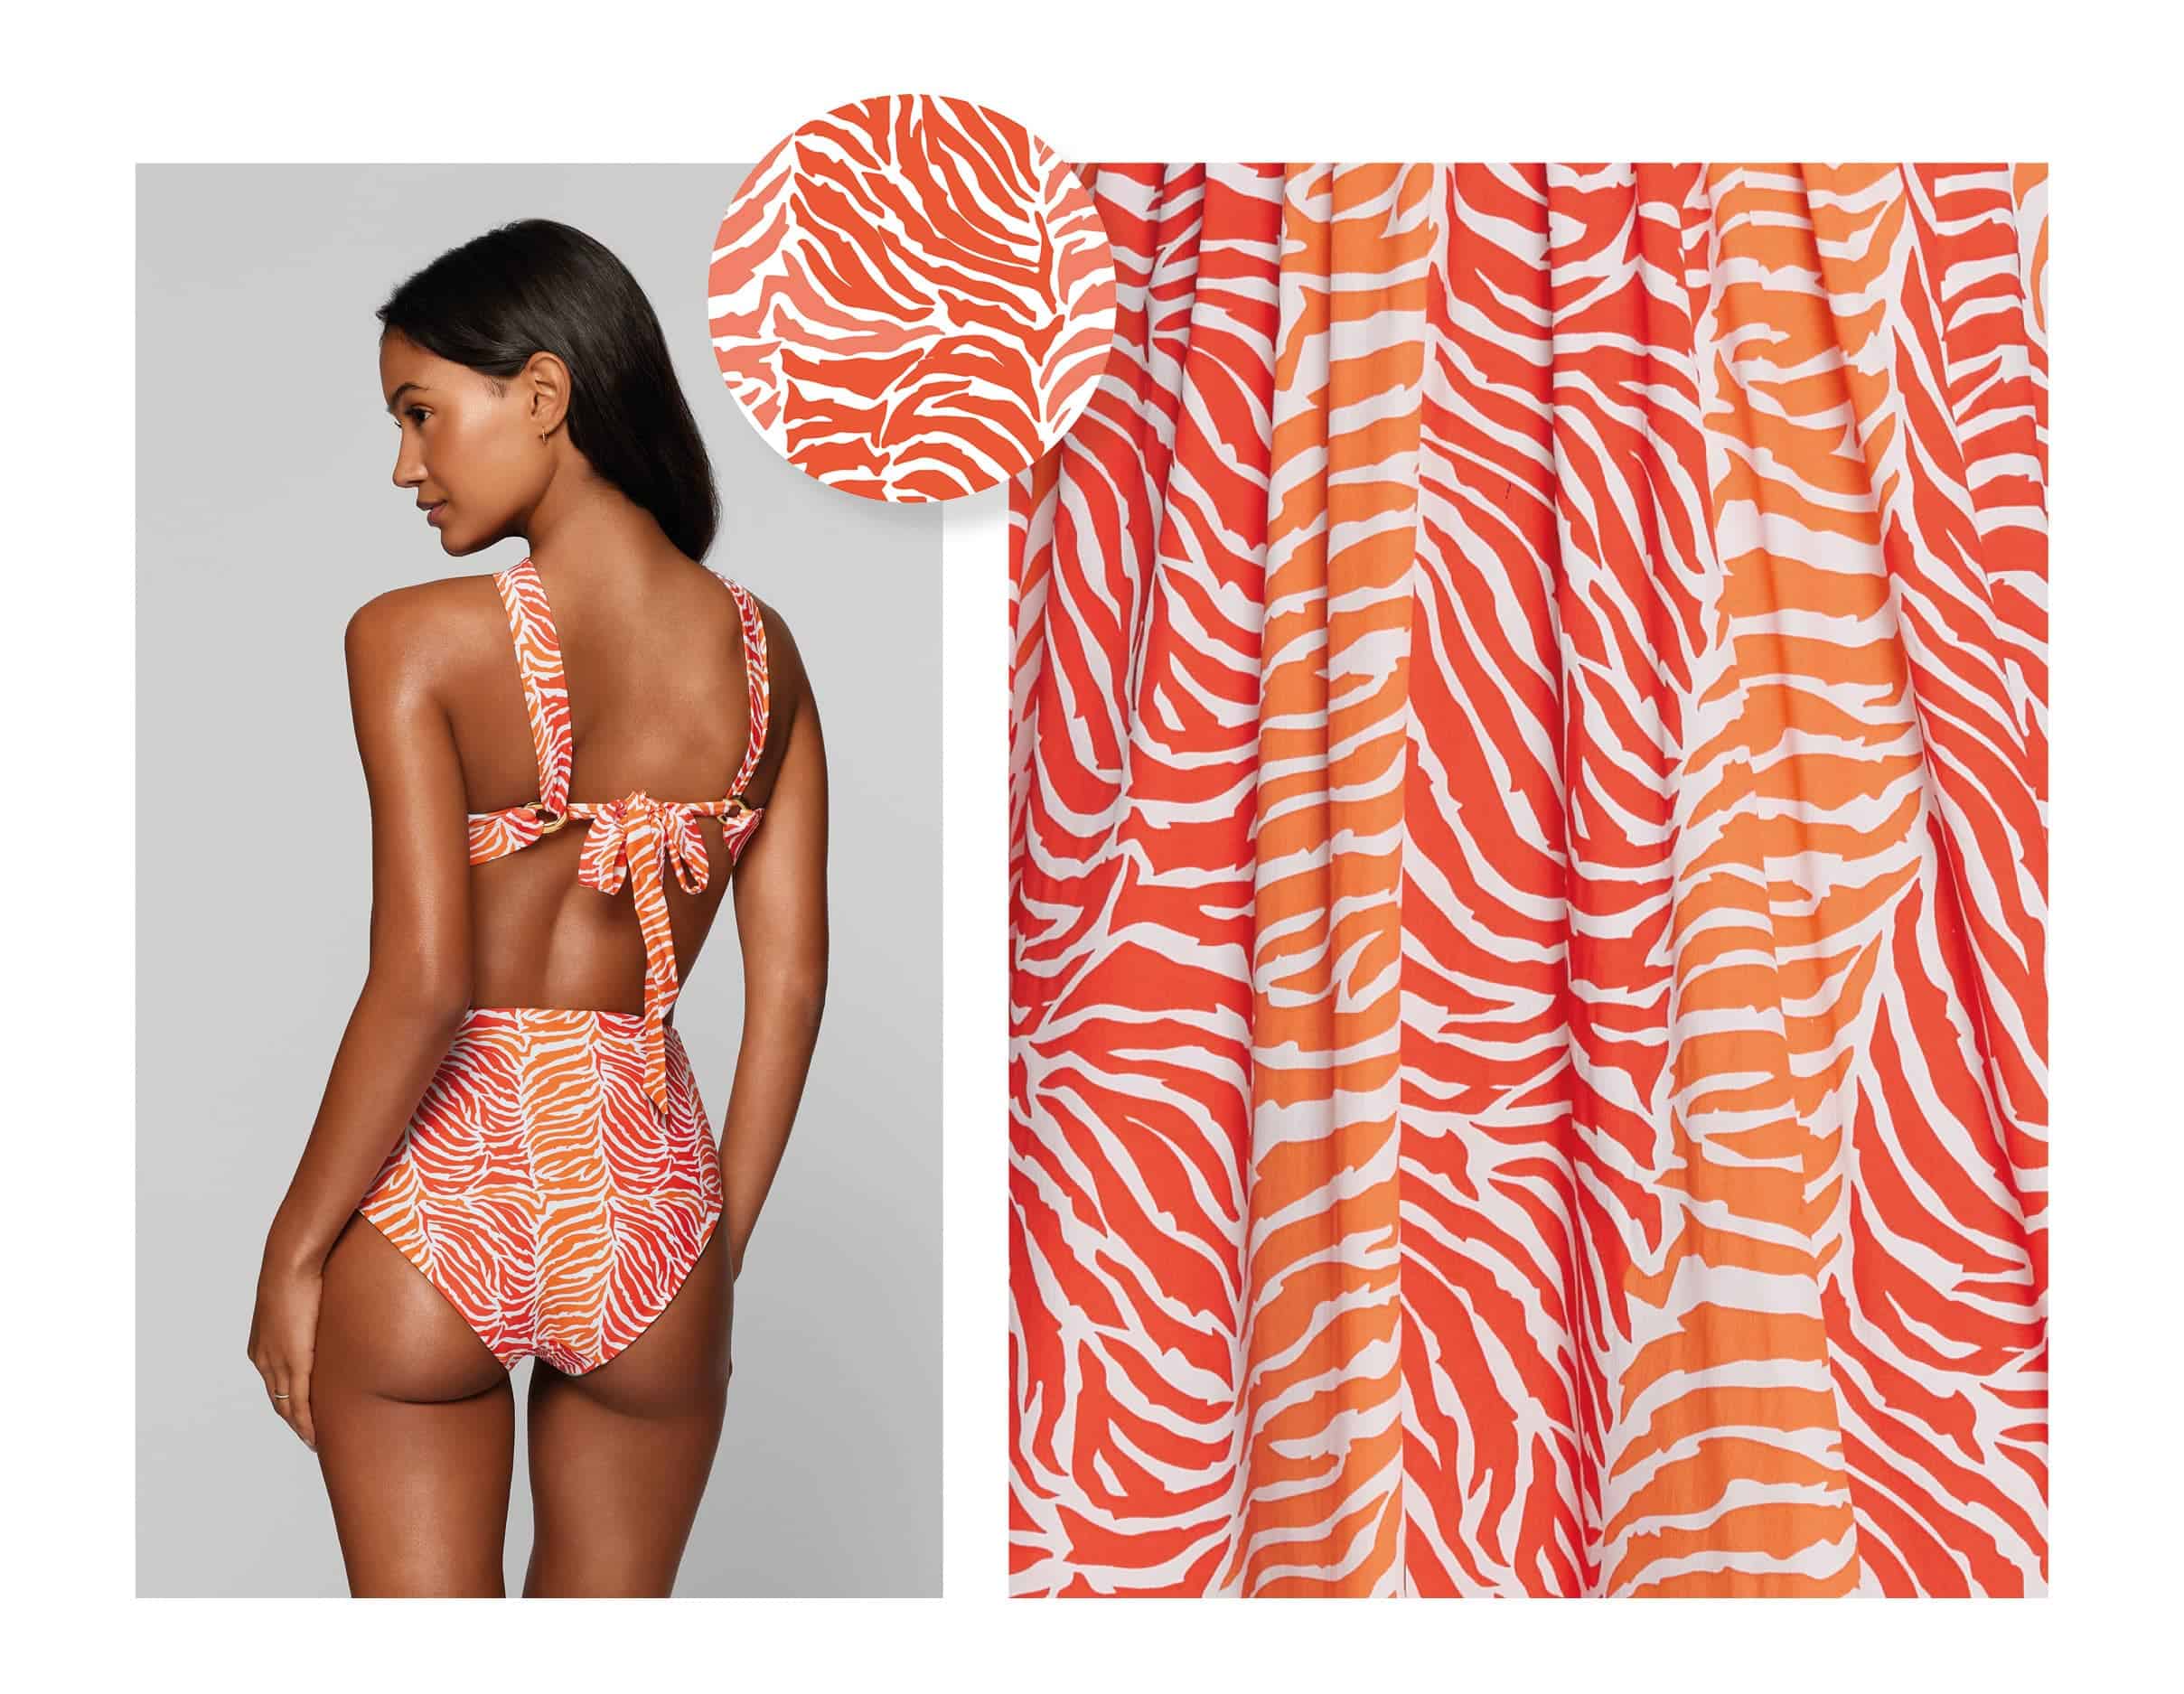 sustainable swimwear fabric sourcing - orange tiger print